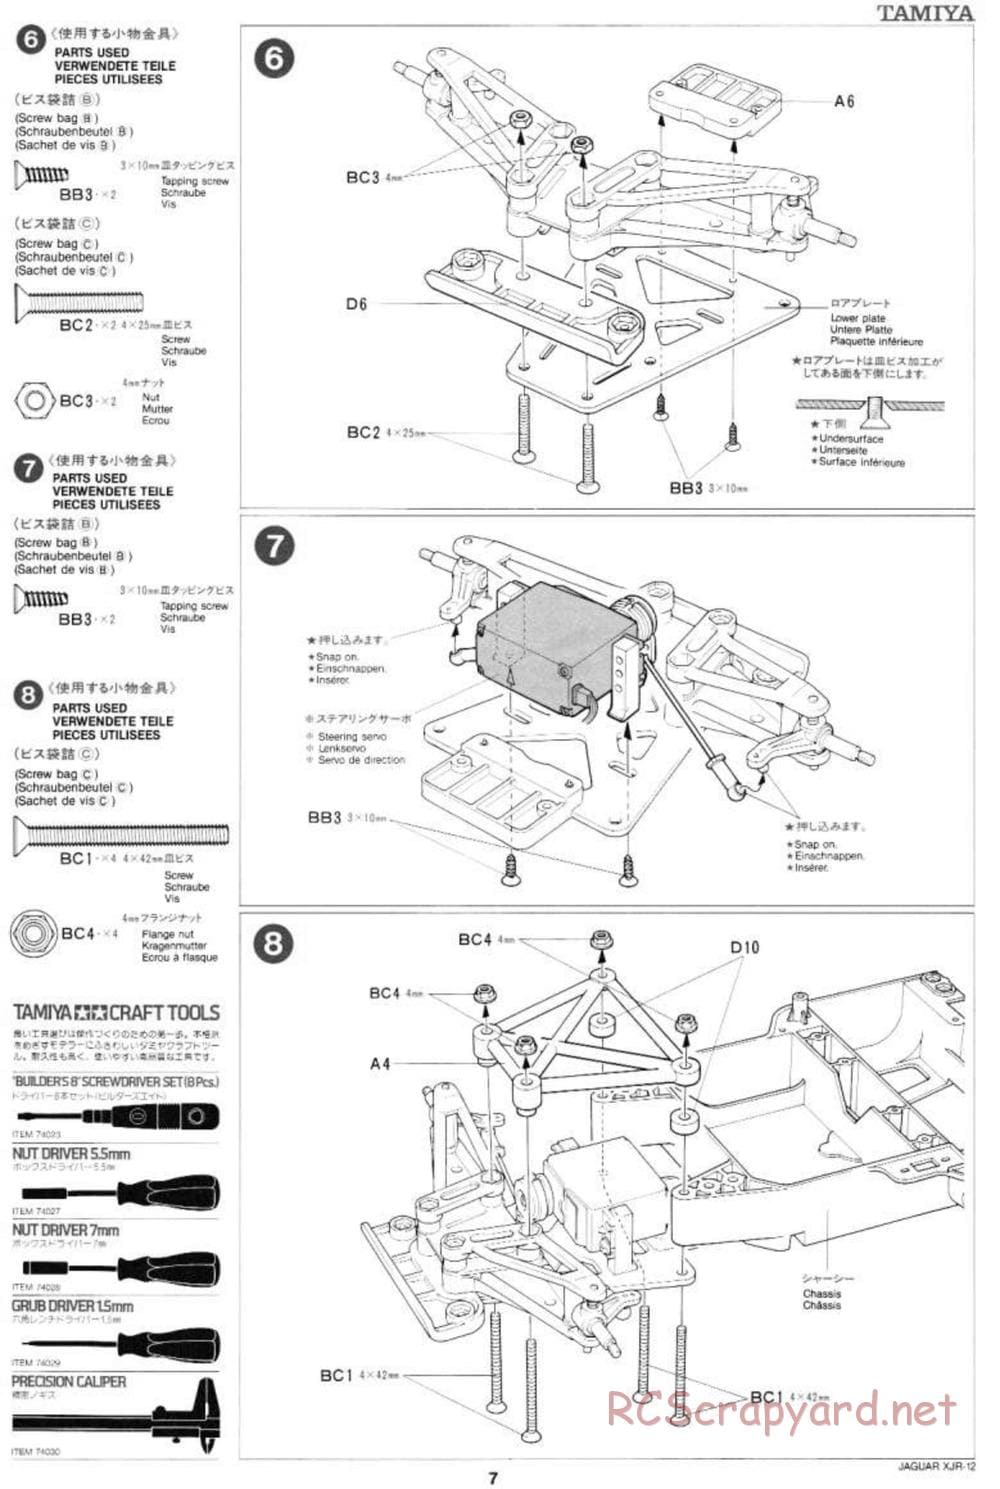 Tamiya - Jaguar XJR-12 Daytona Winner - Group-C Chassis - Manual - Page 7